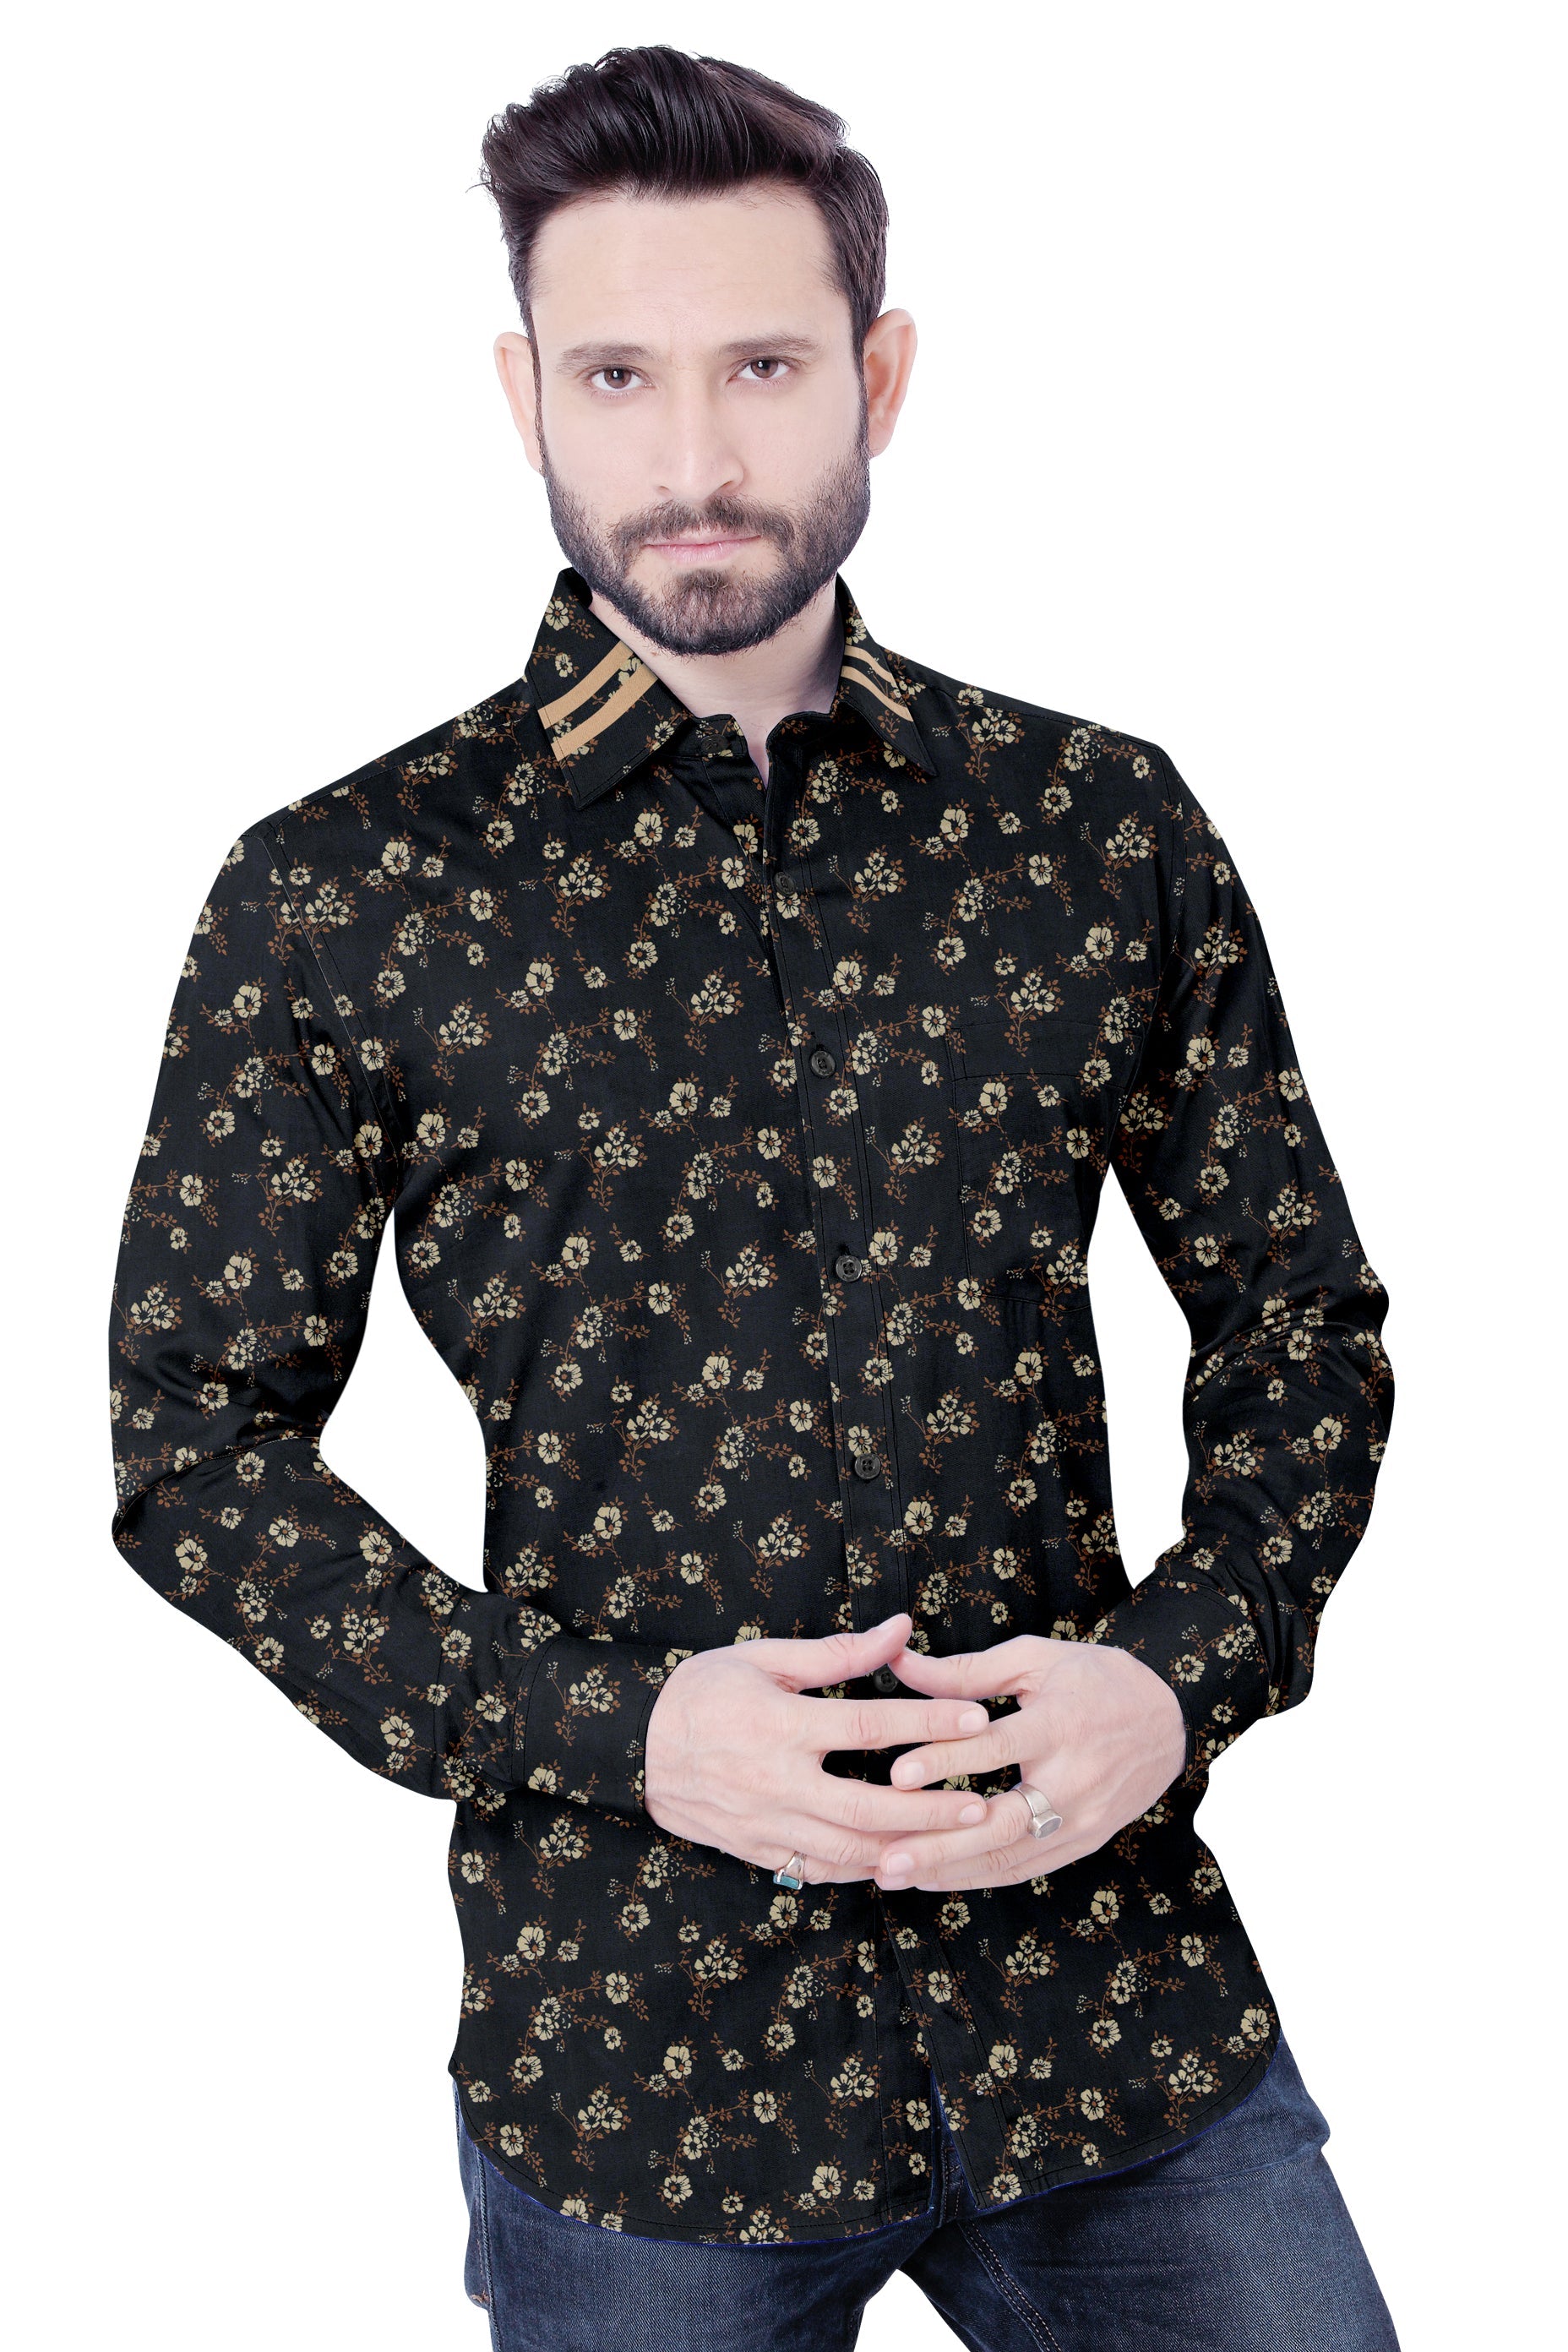 Men's Black Yellow Flower Printed Casual Shirt Full Sleeves 100% Cotton 